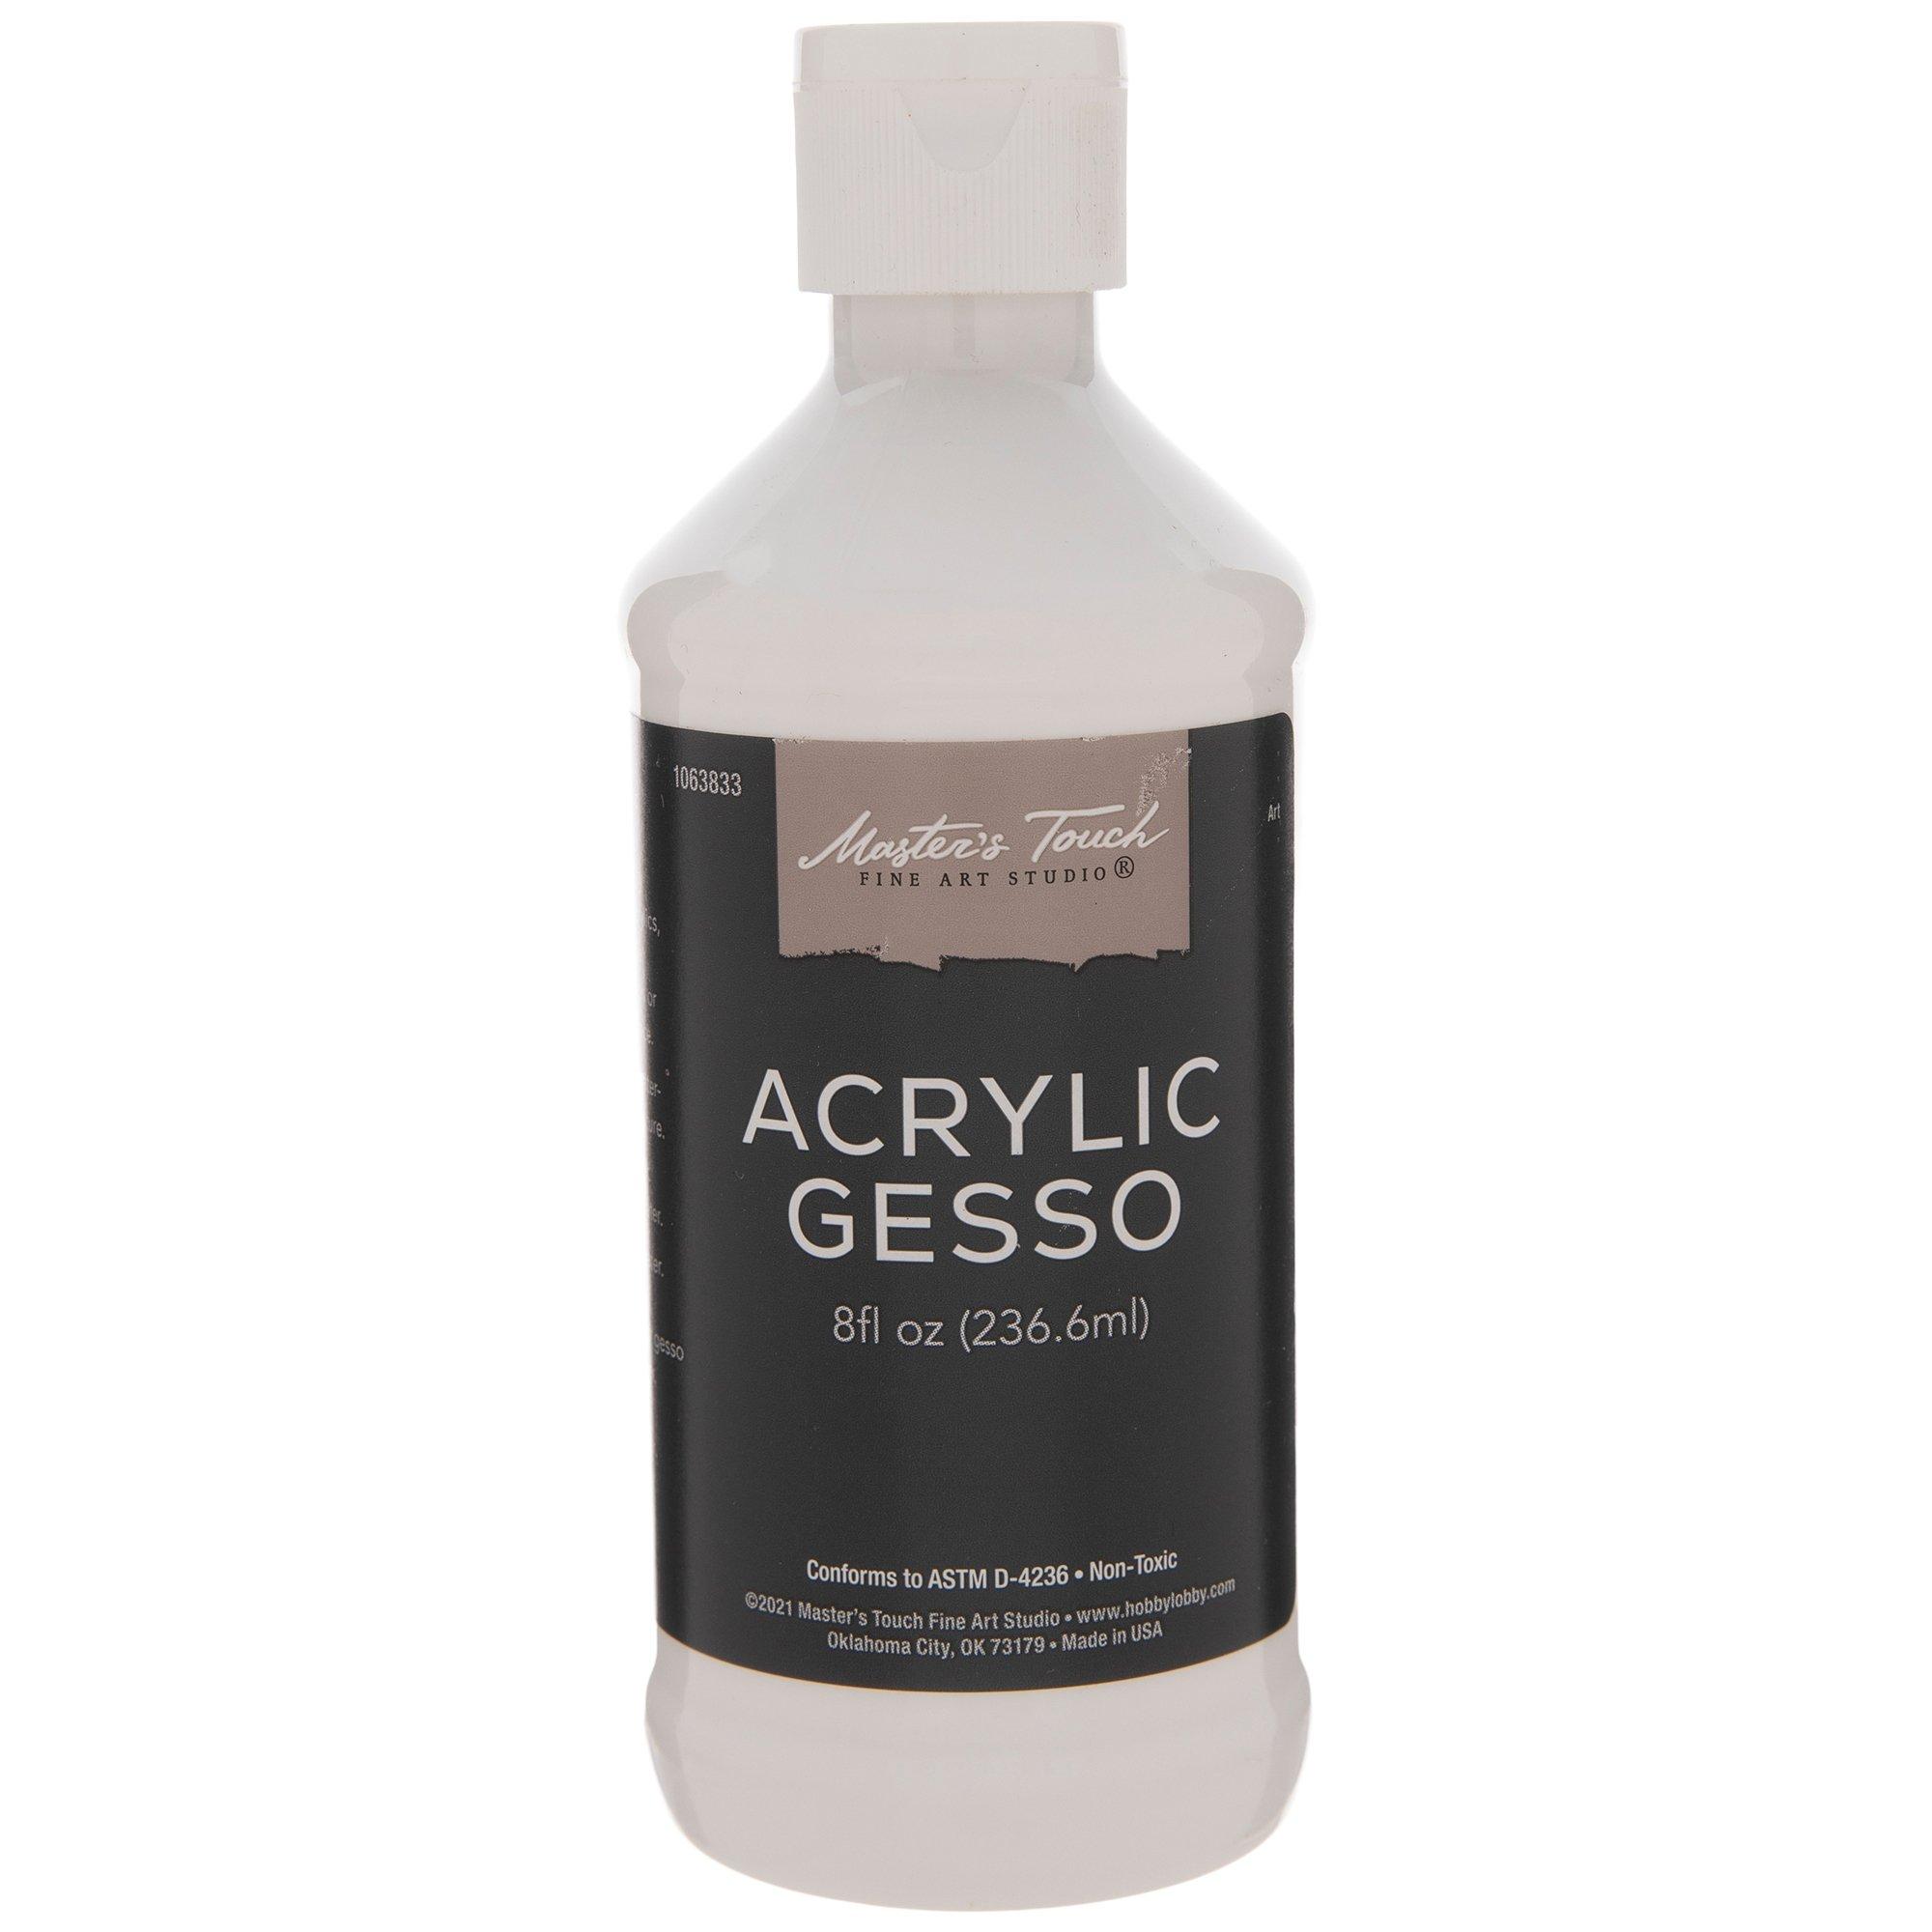 U.S. Art Supply White Gesso Acrylic Medium, 500ml Tub